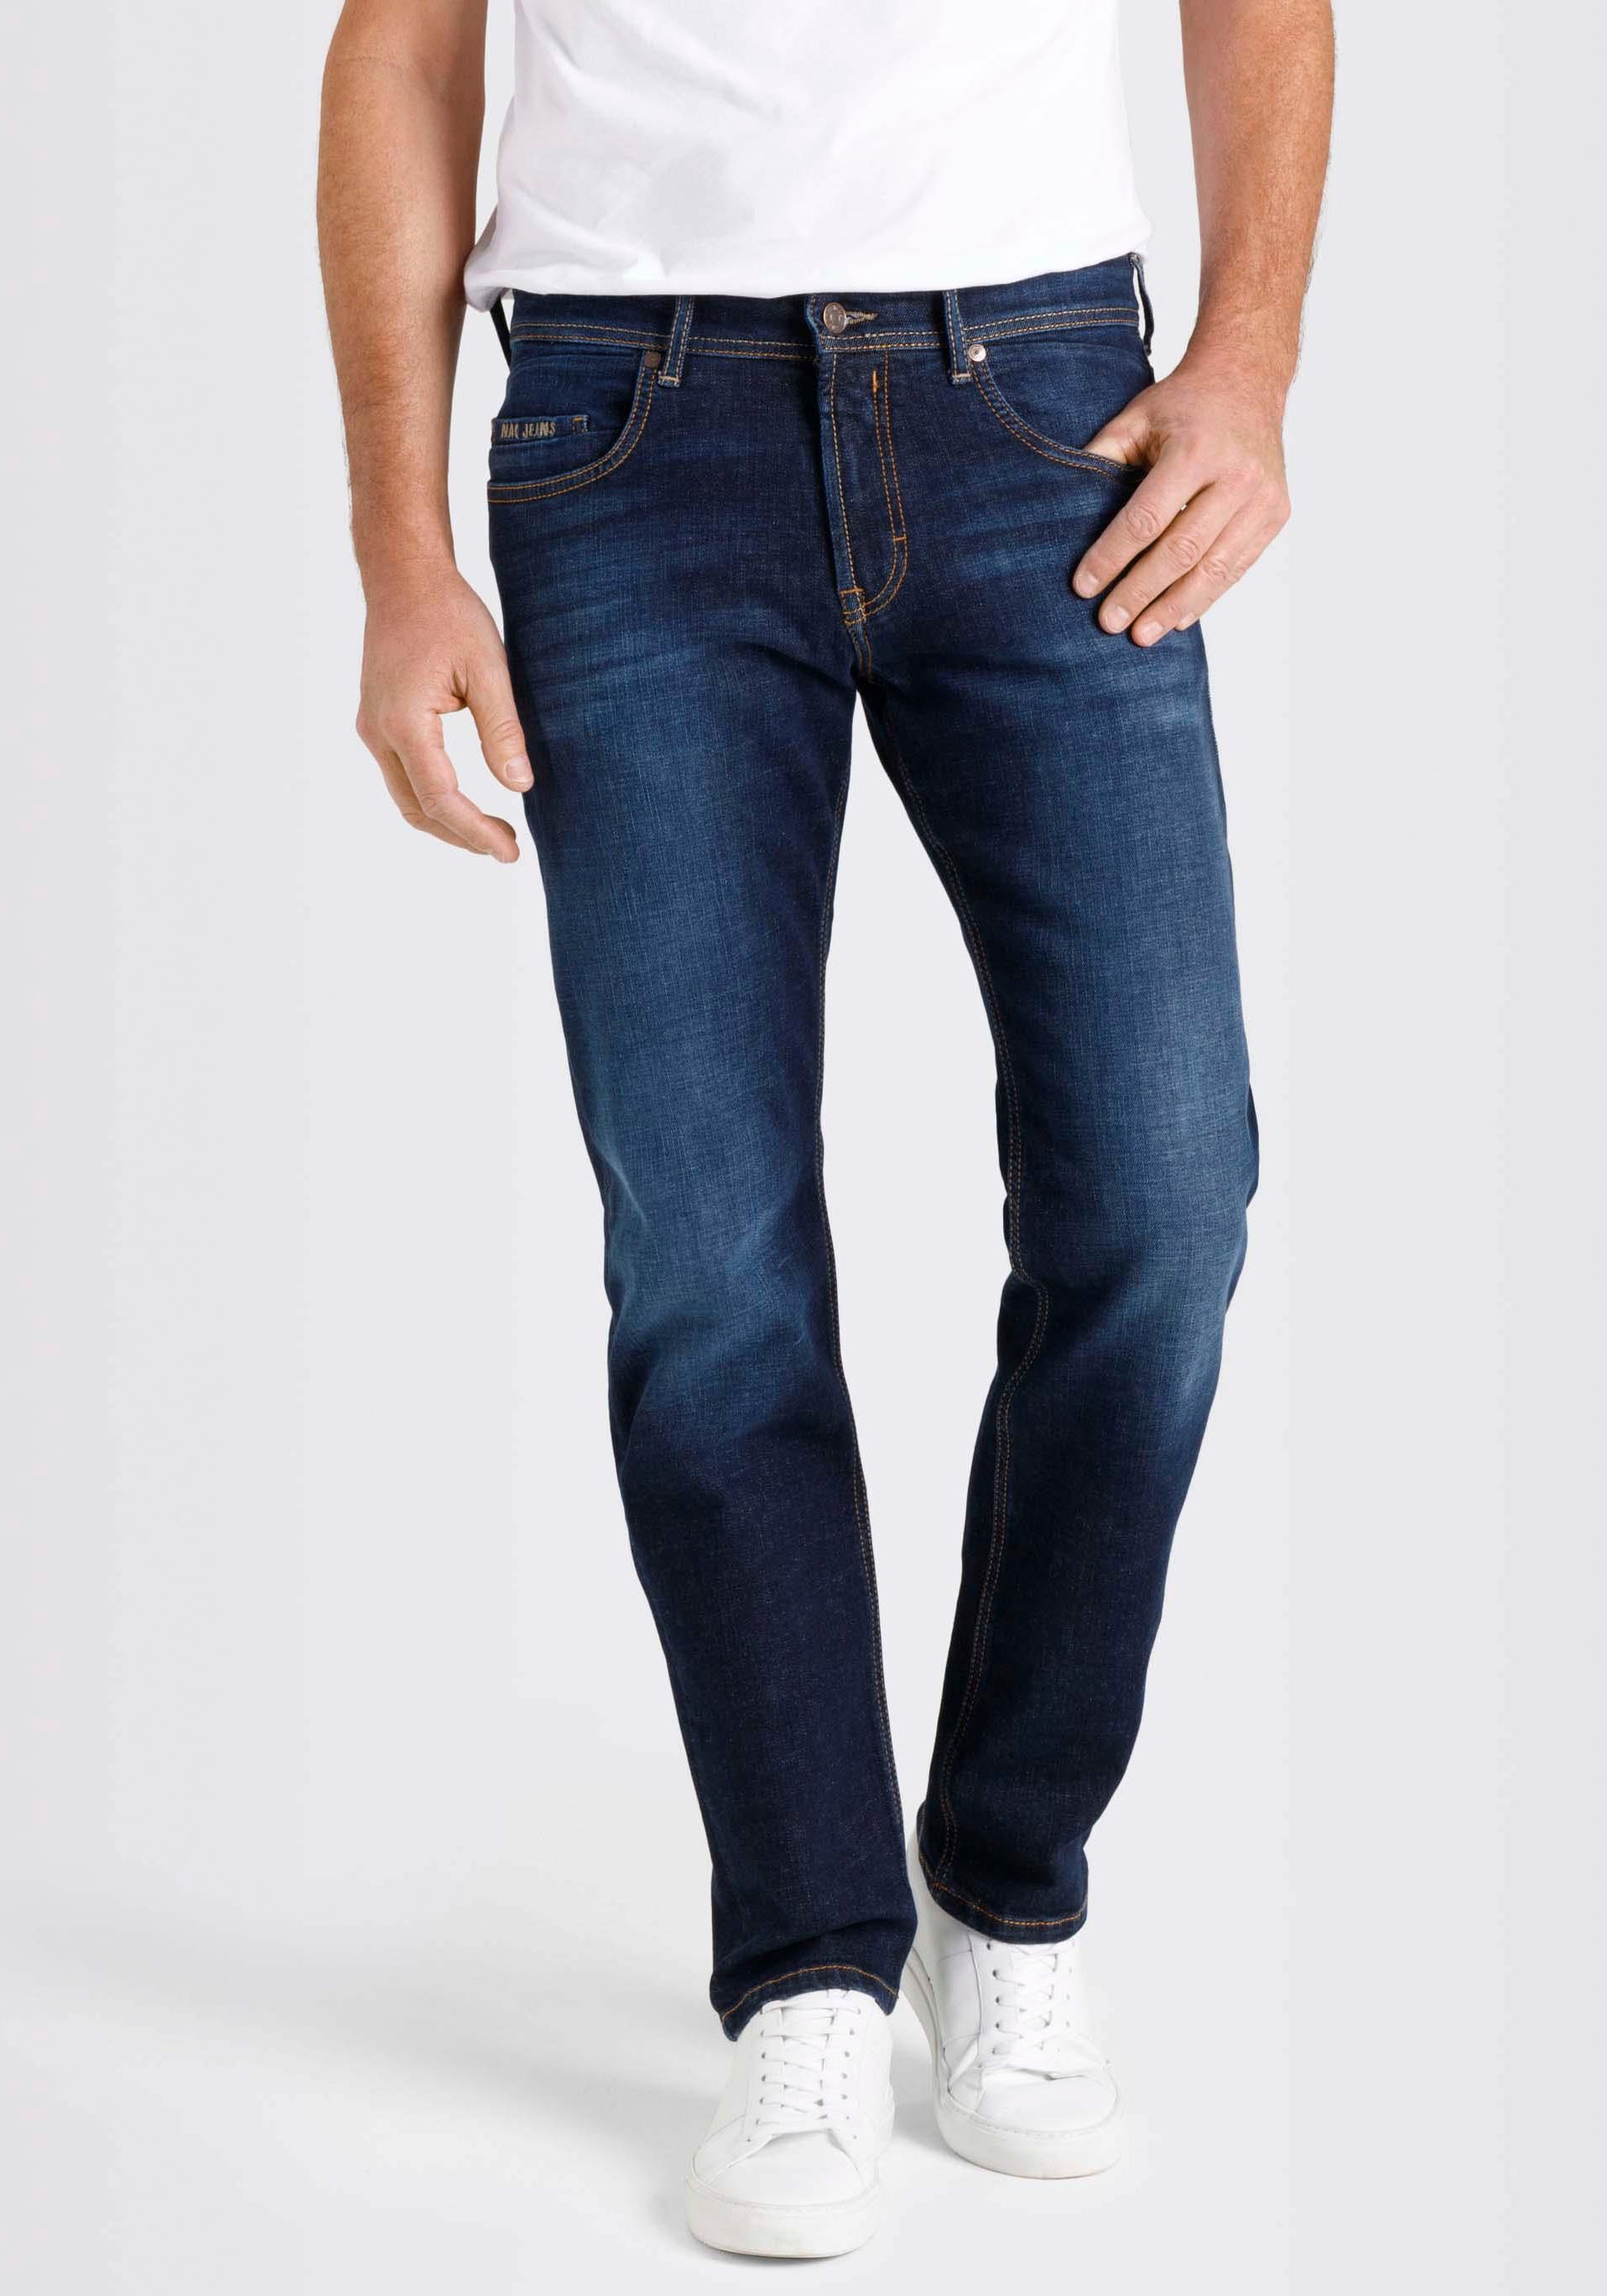 MAC Jeans Herren Ben Loose Fit Jeans, Blau (Blue Black H799), W35/L30 (Herstellergröße: 35/30)